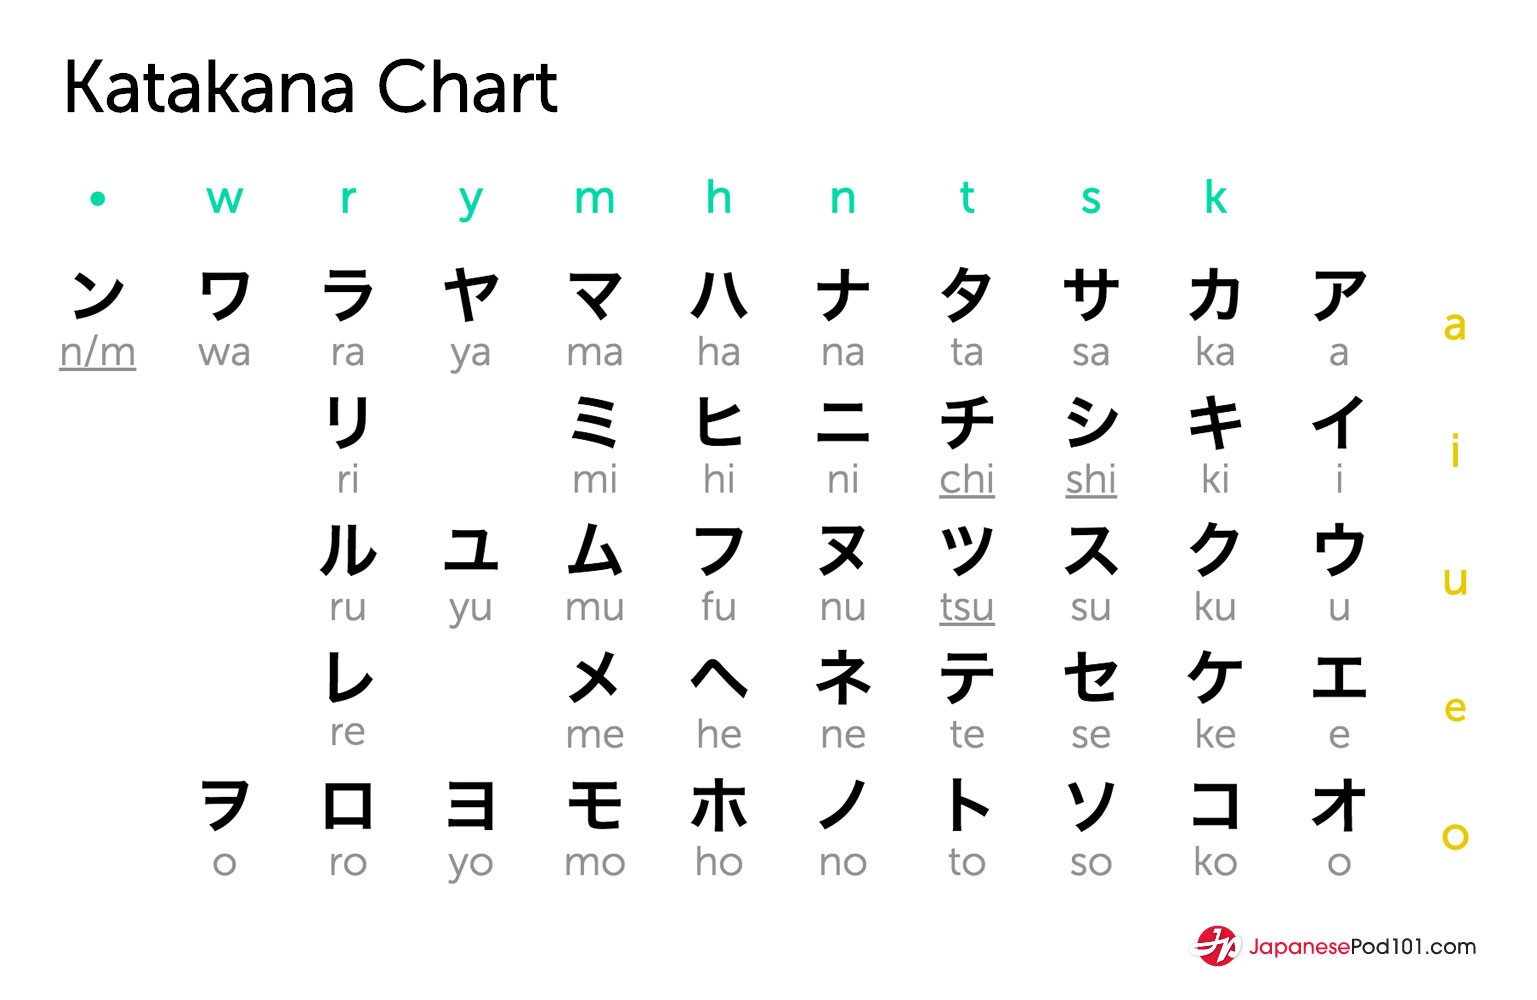 The Japanese Alphabet: Hiragana and Katakana